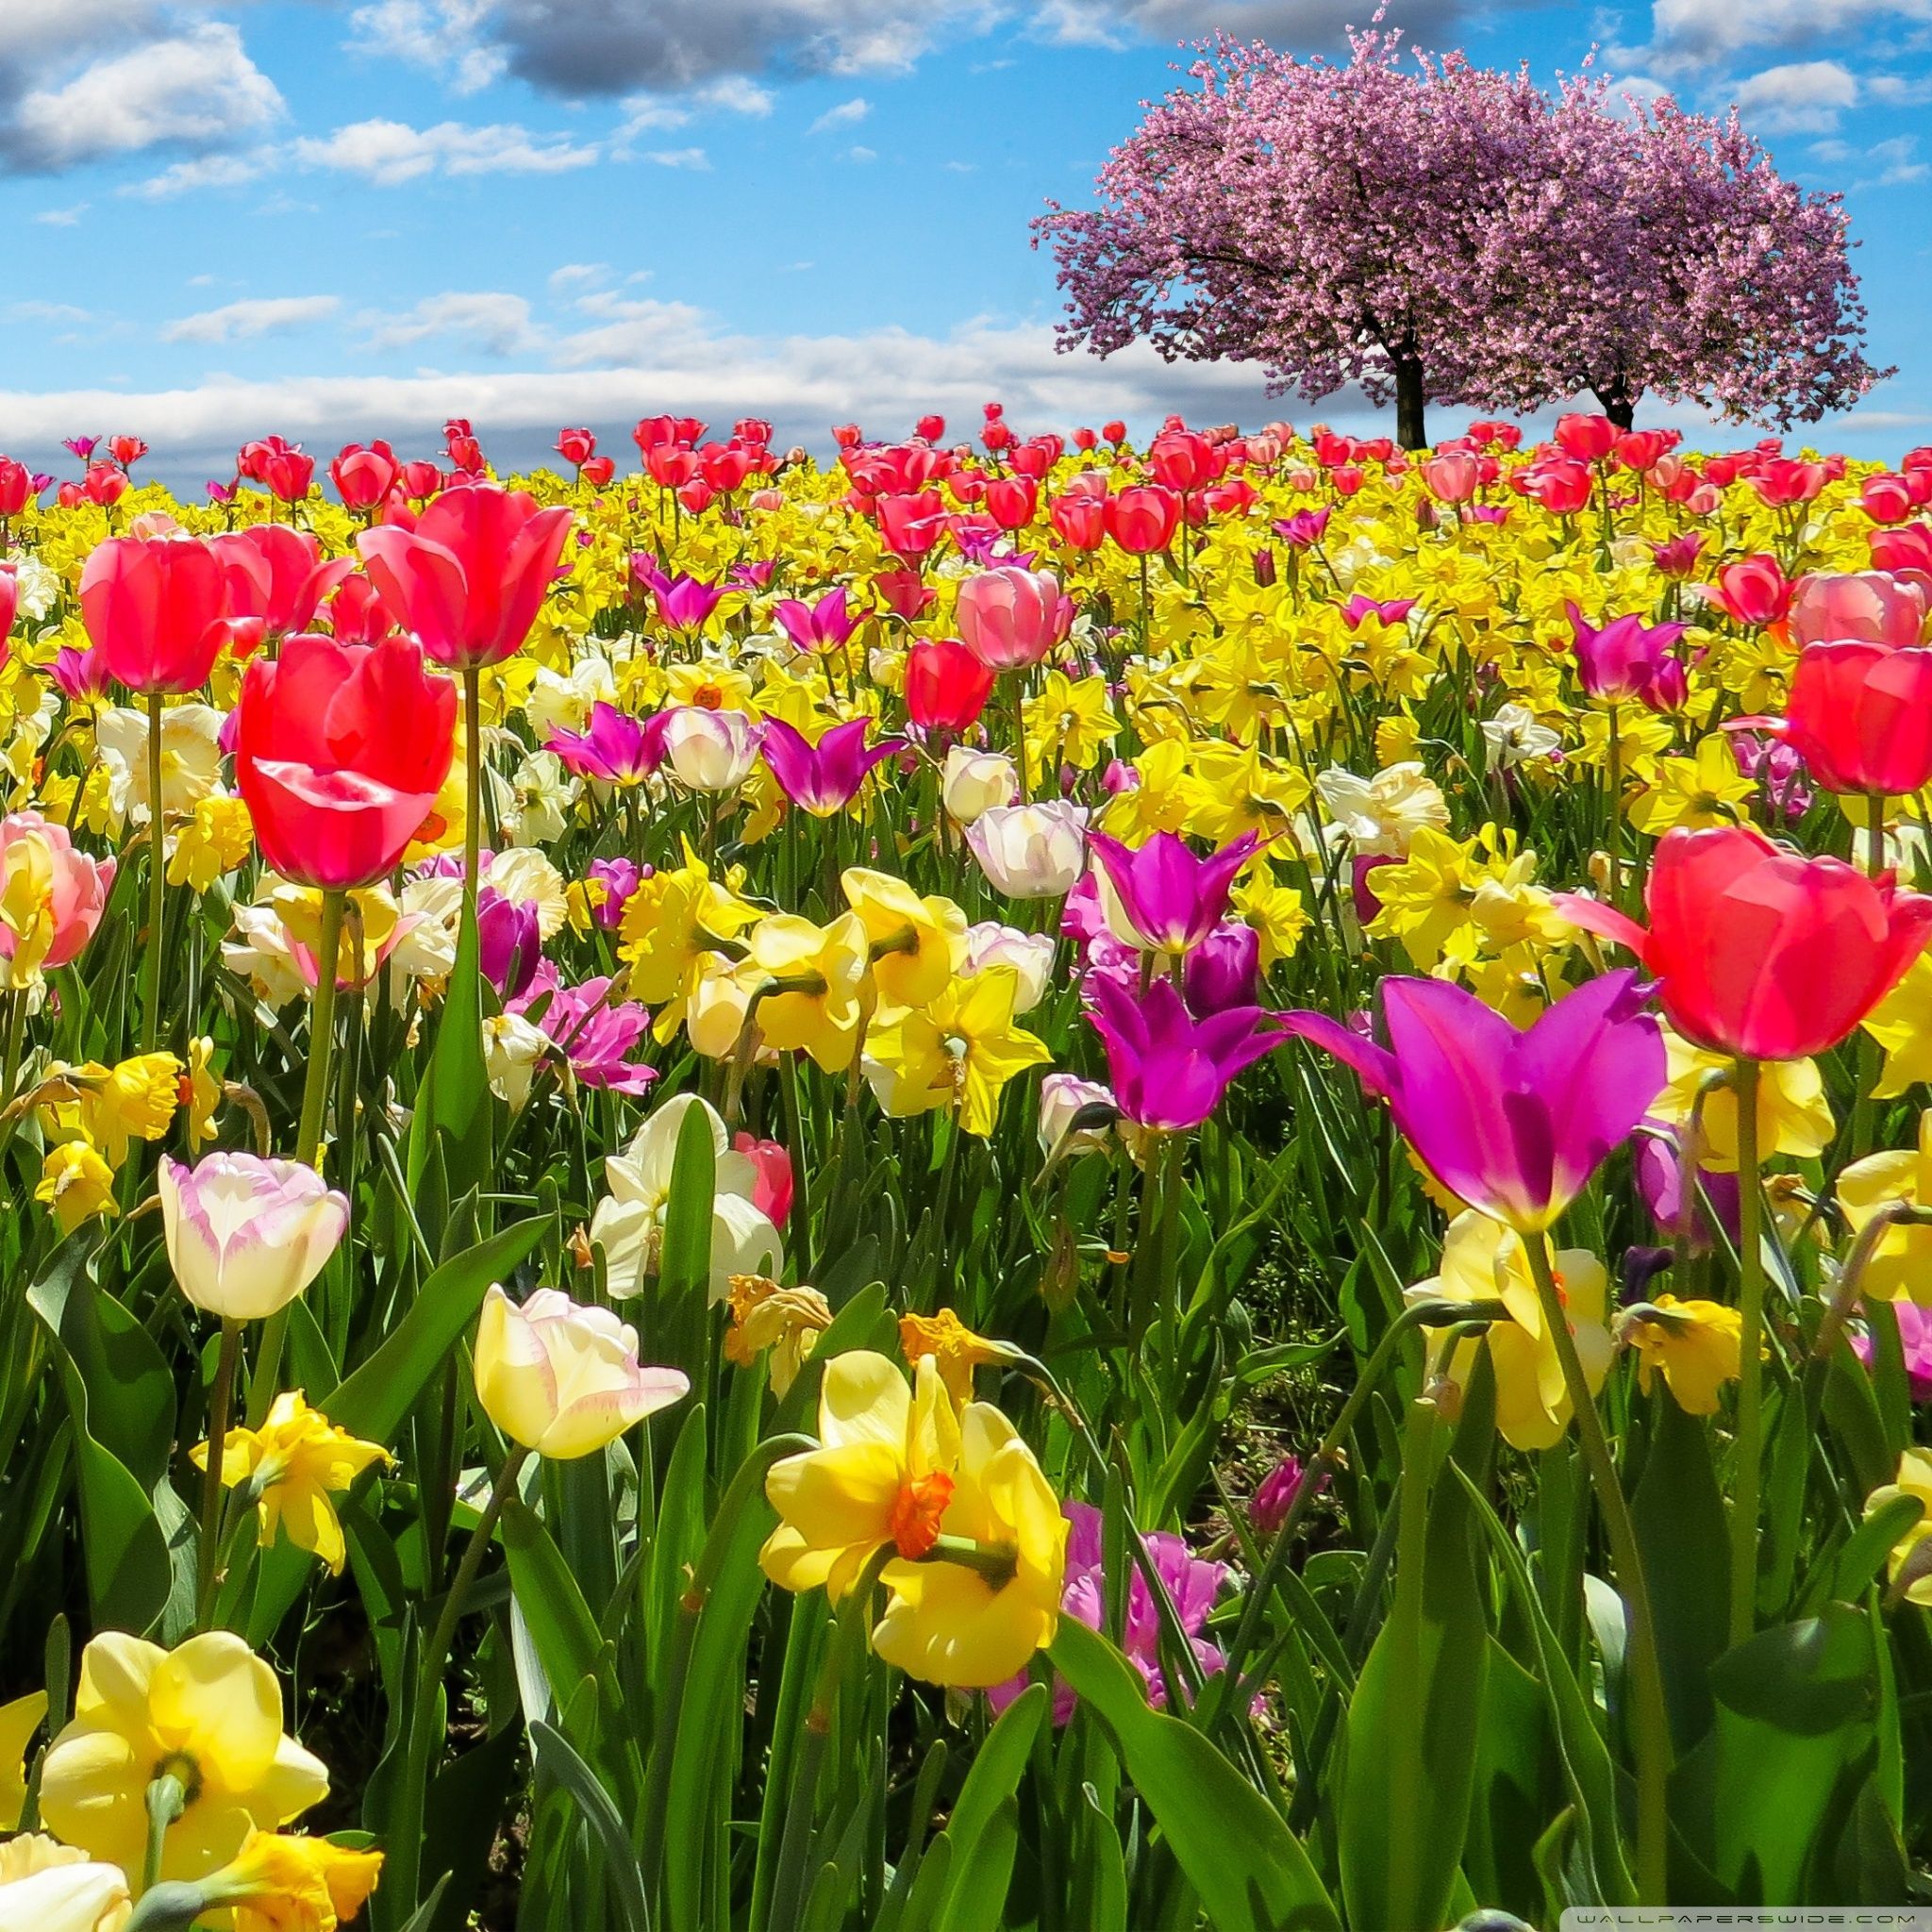 Spring Trees and Flowers Ultra HD Desktop Background Wallpaper for 4K UHD TV, Widescreen & UltraWide Desktop & Laptop, Multi Display, Dual Monitor, Tablet